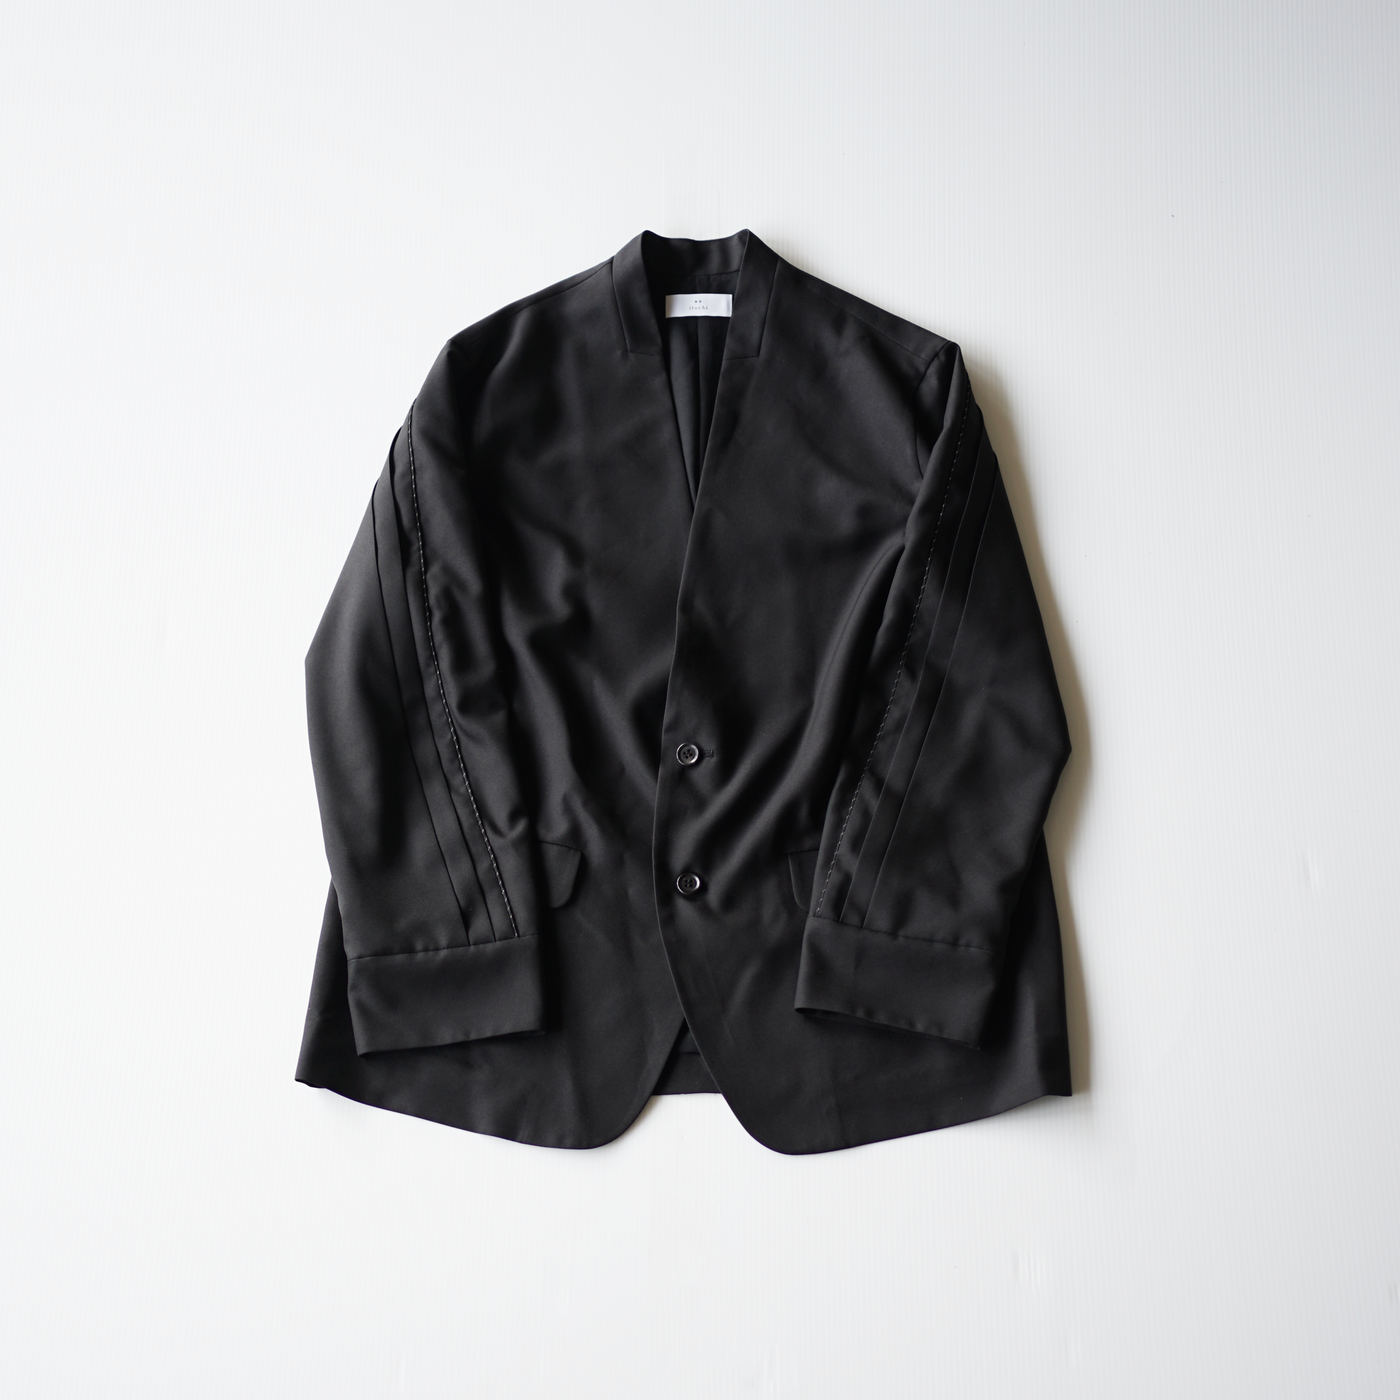 Polyester linon pleated sleeve collarless jacket